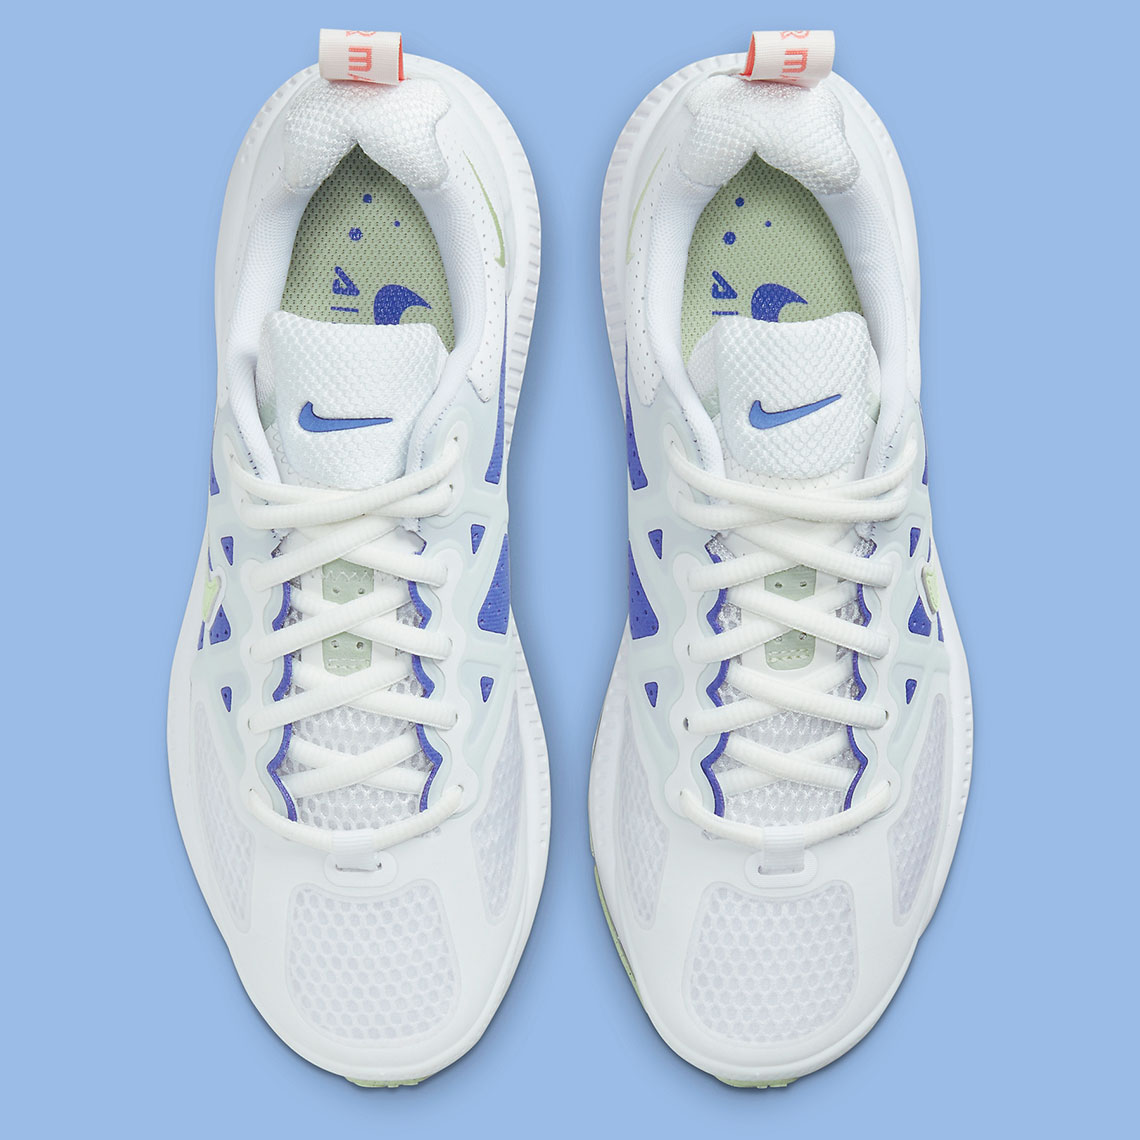 Nike Air Max Genome White Multi Dc4057 101 3